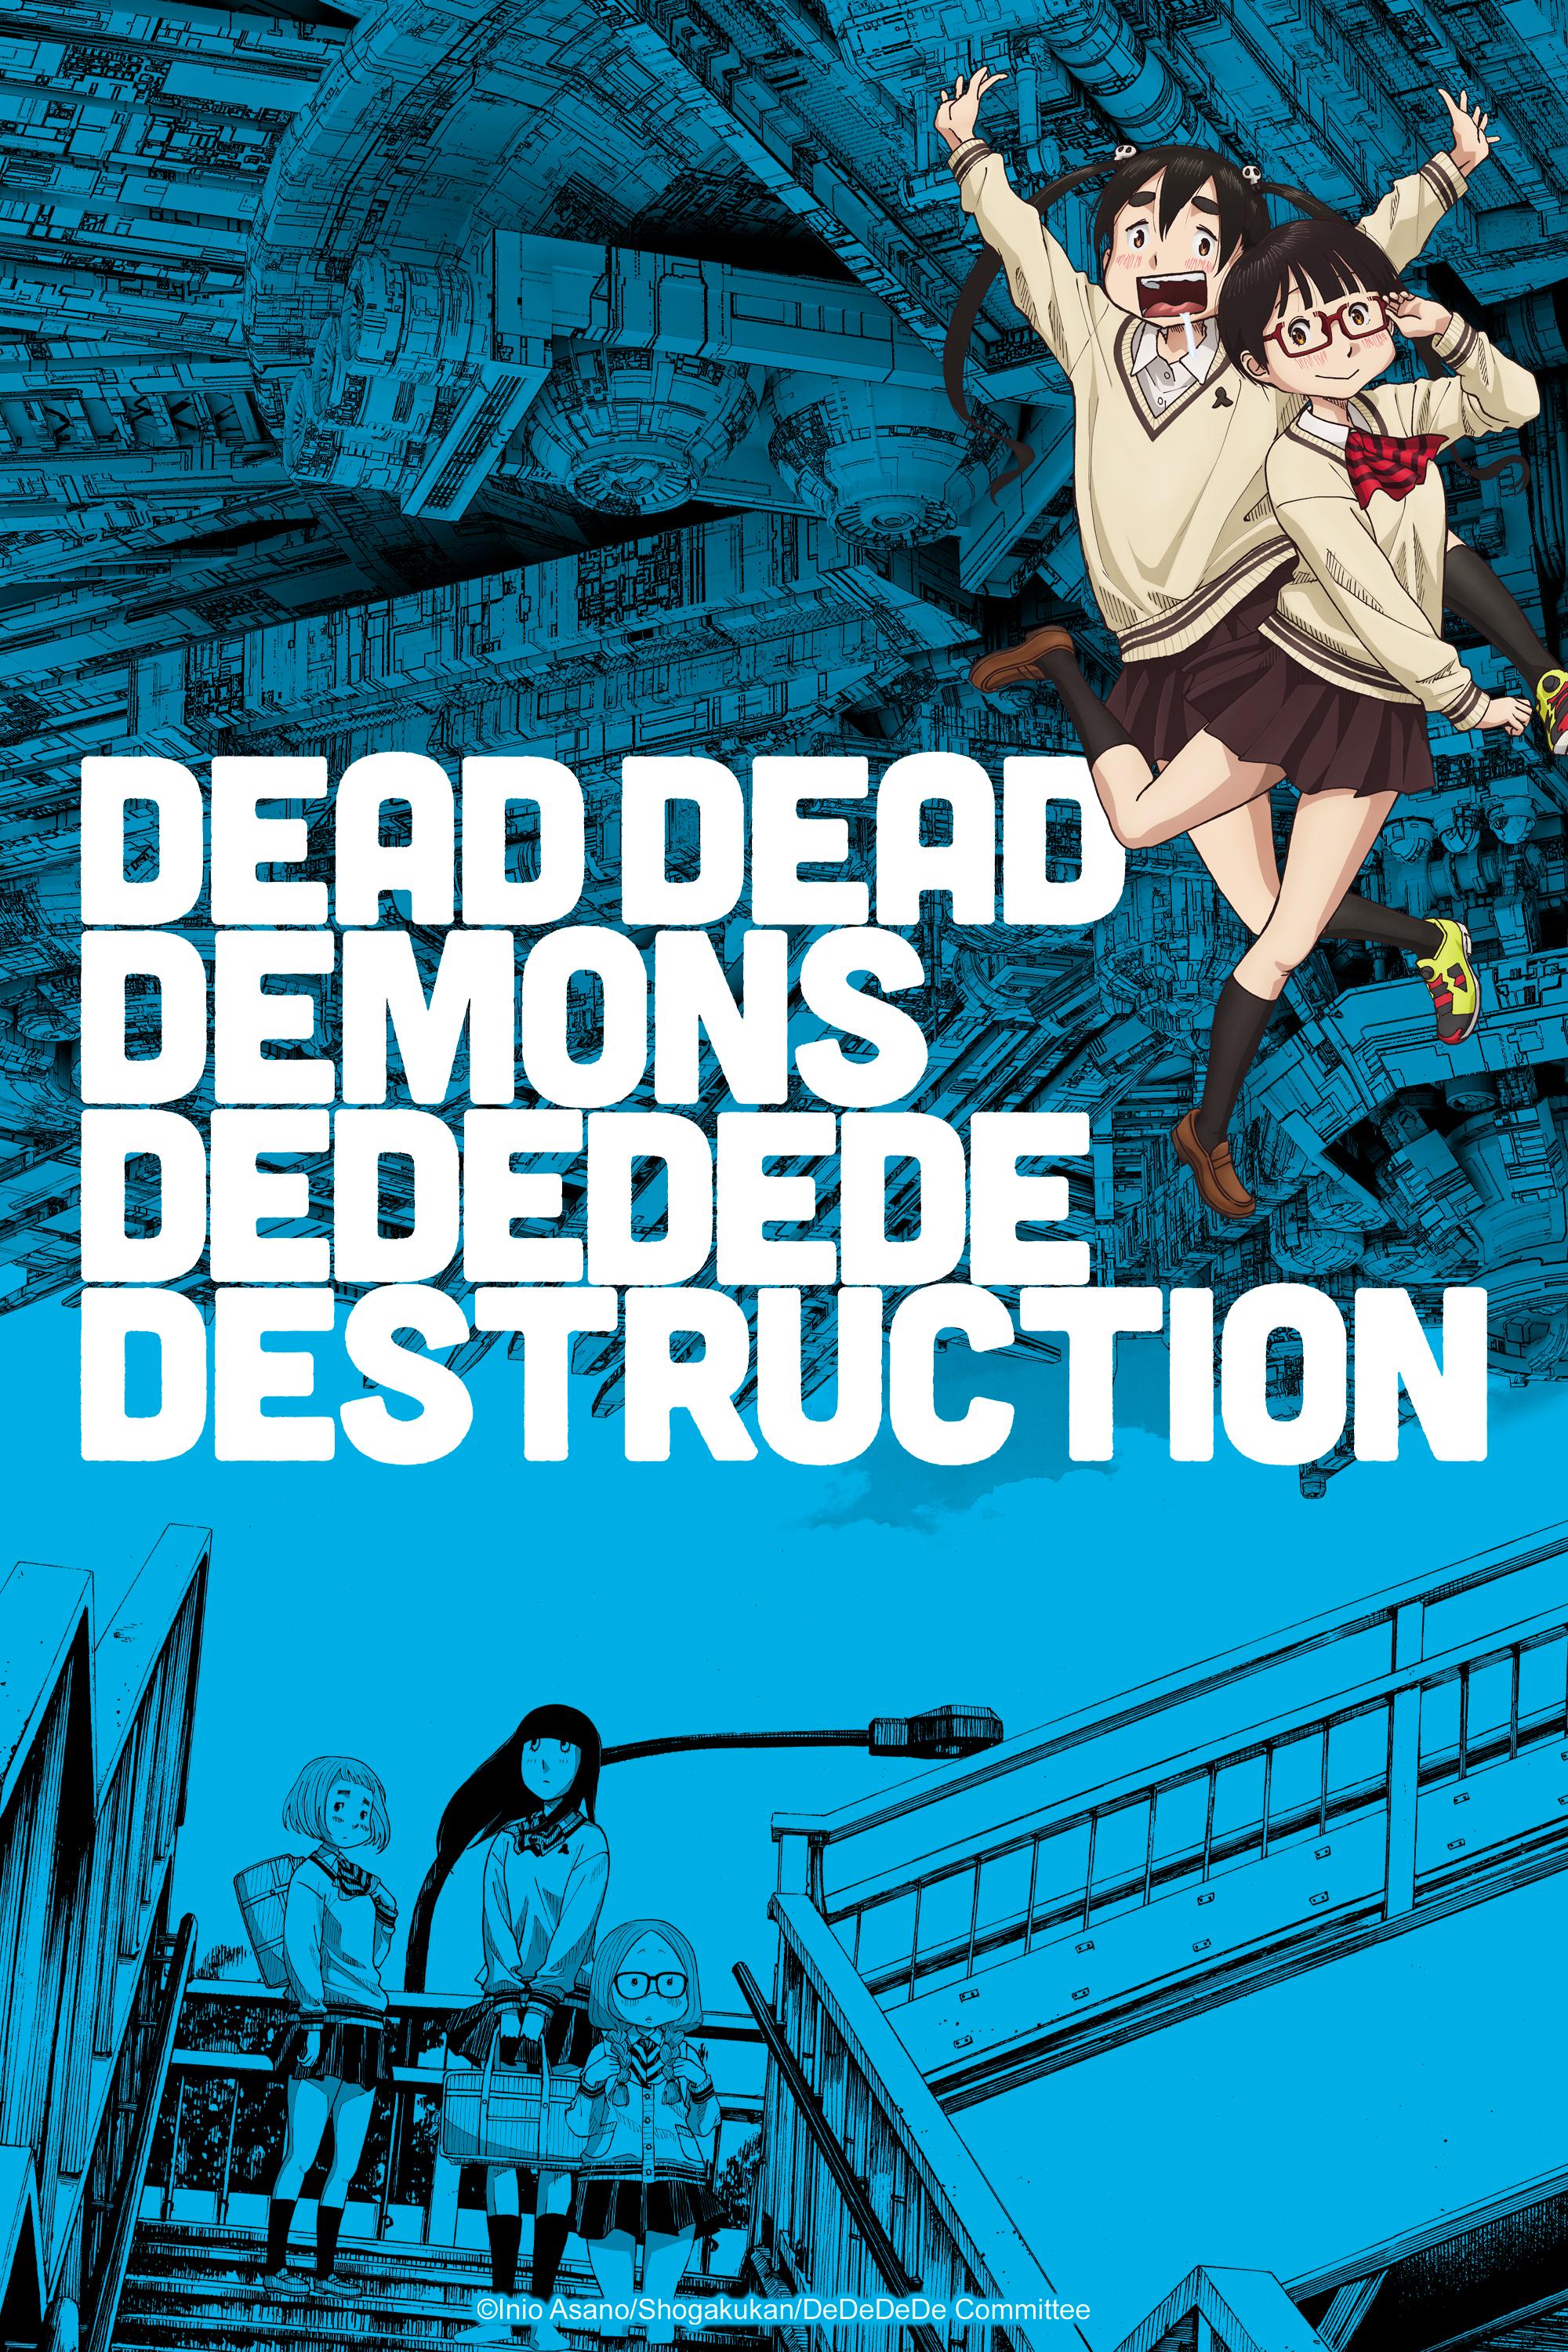 Watch DEAD DEAD DEMONS DEDEDEDE DESTRUCTION - Crunchyroll